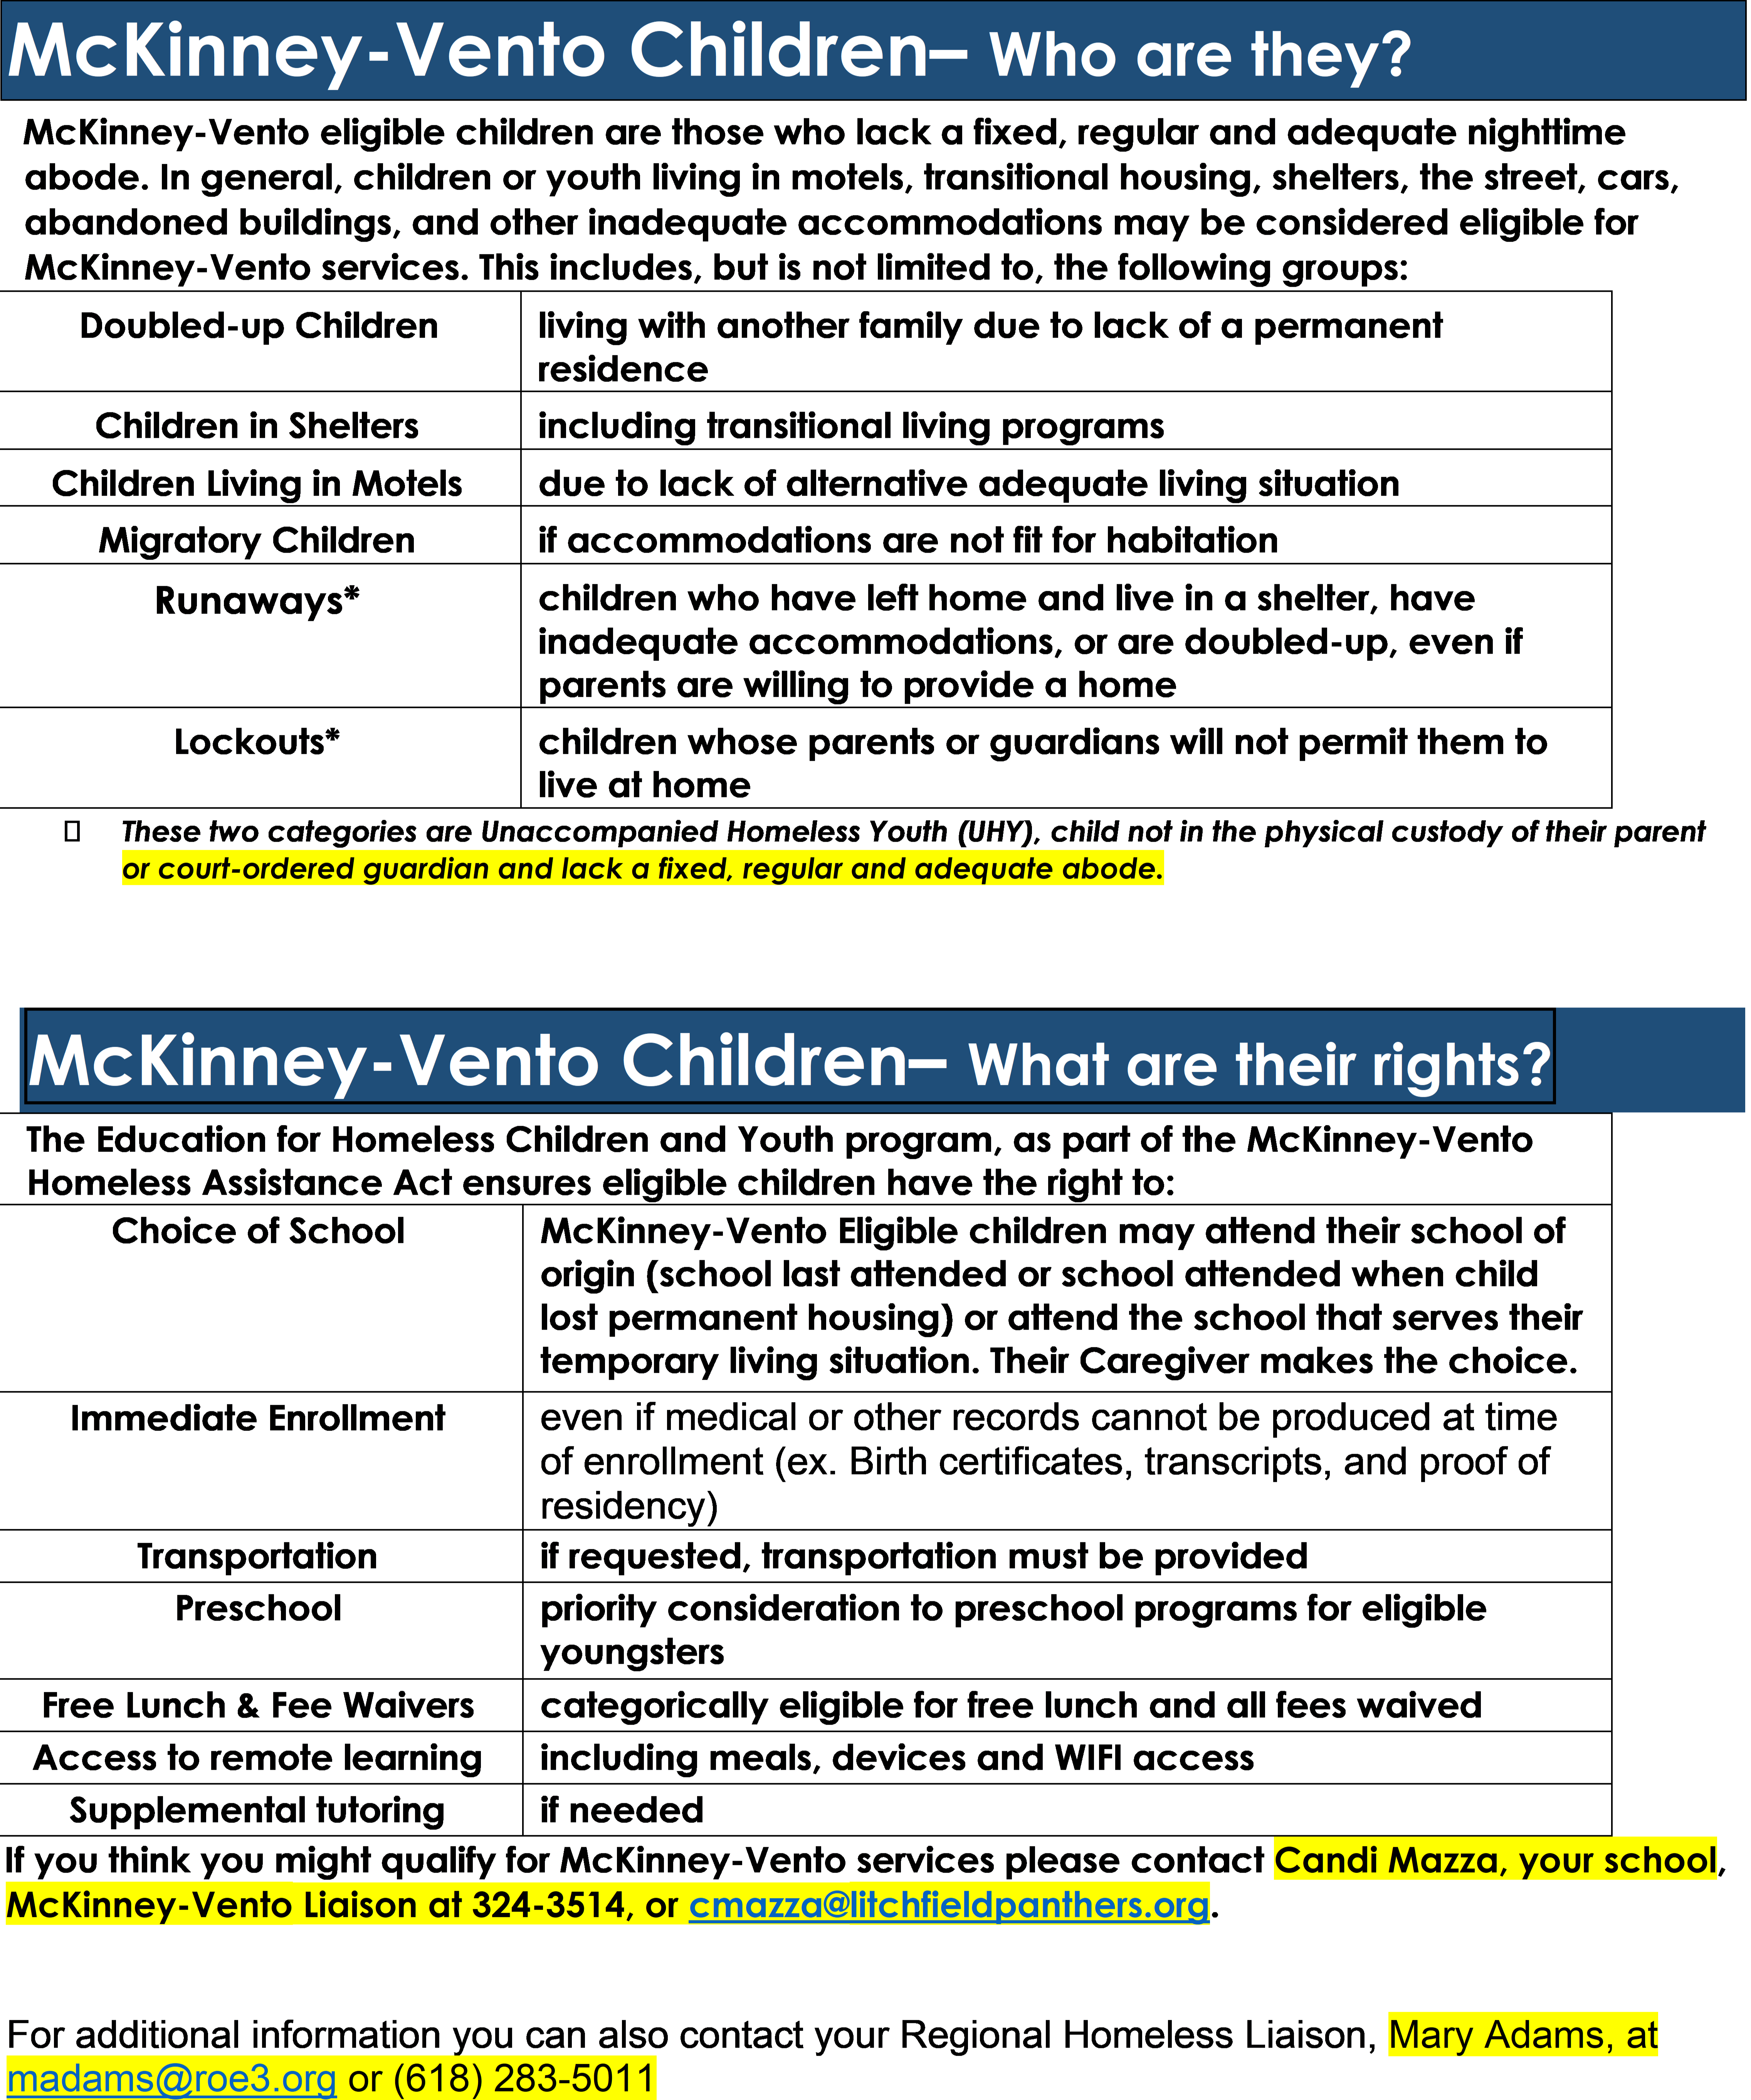 McKinney-Vento Children and their rights